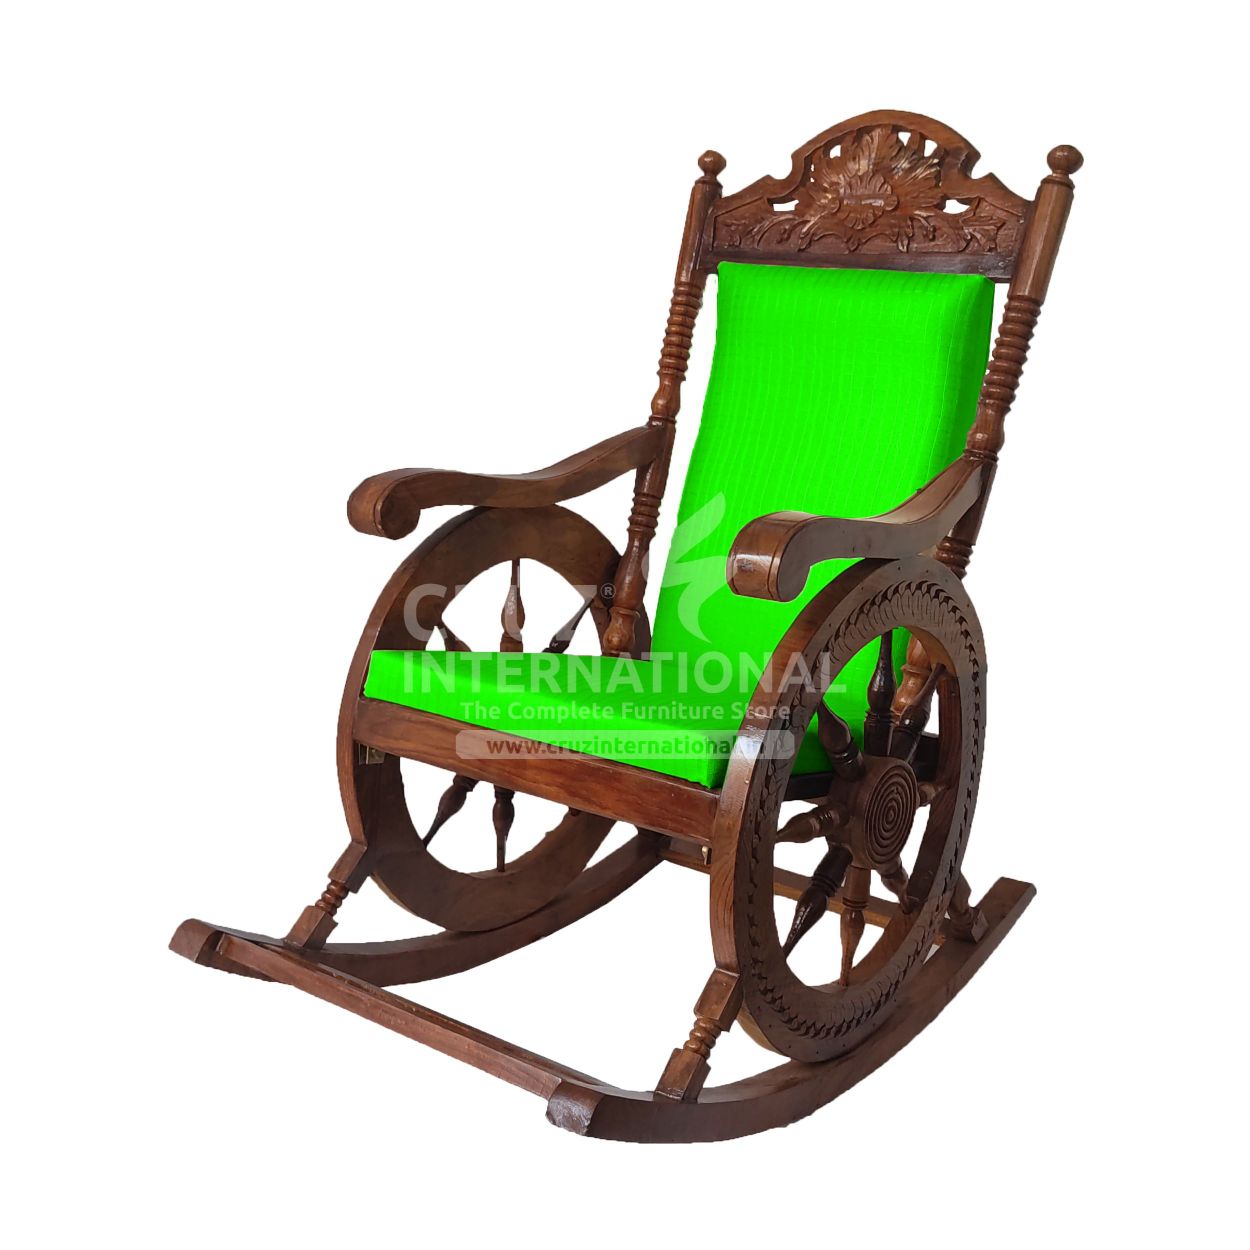 Evergreen Luna Rocking Chair | Natural | 12 Colurs Available CRUZ INTERNATIONAL